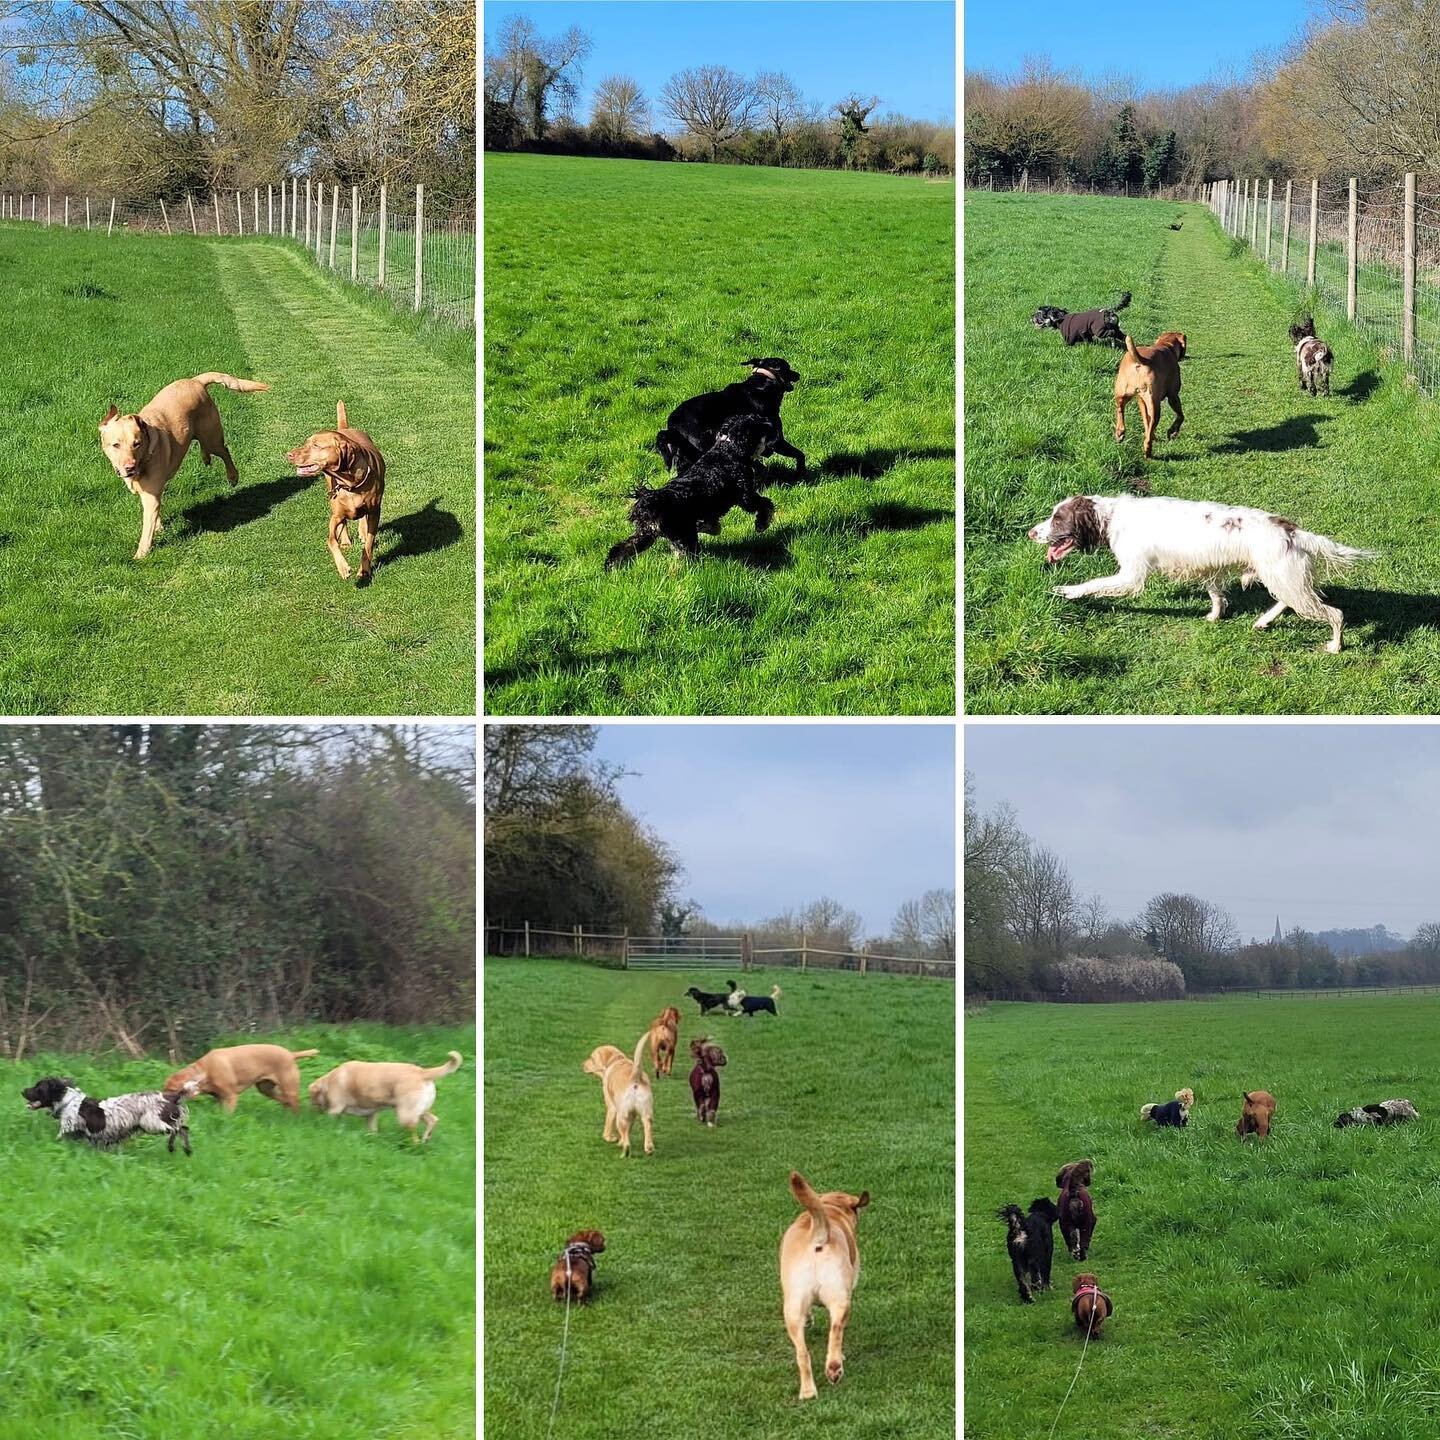 Fun in the fields as always over the past week #dogwalks #offlead #twicedaily #labradors #vizsla #springerspaniel #sprocker #dachshund #cockapoos #doghomeboarding #dogboarding